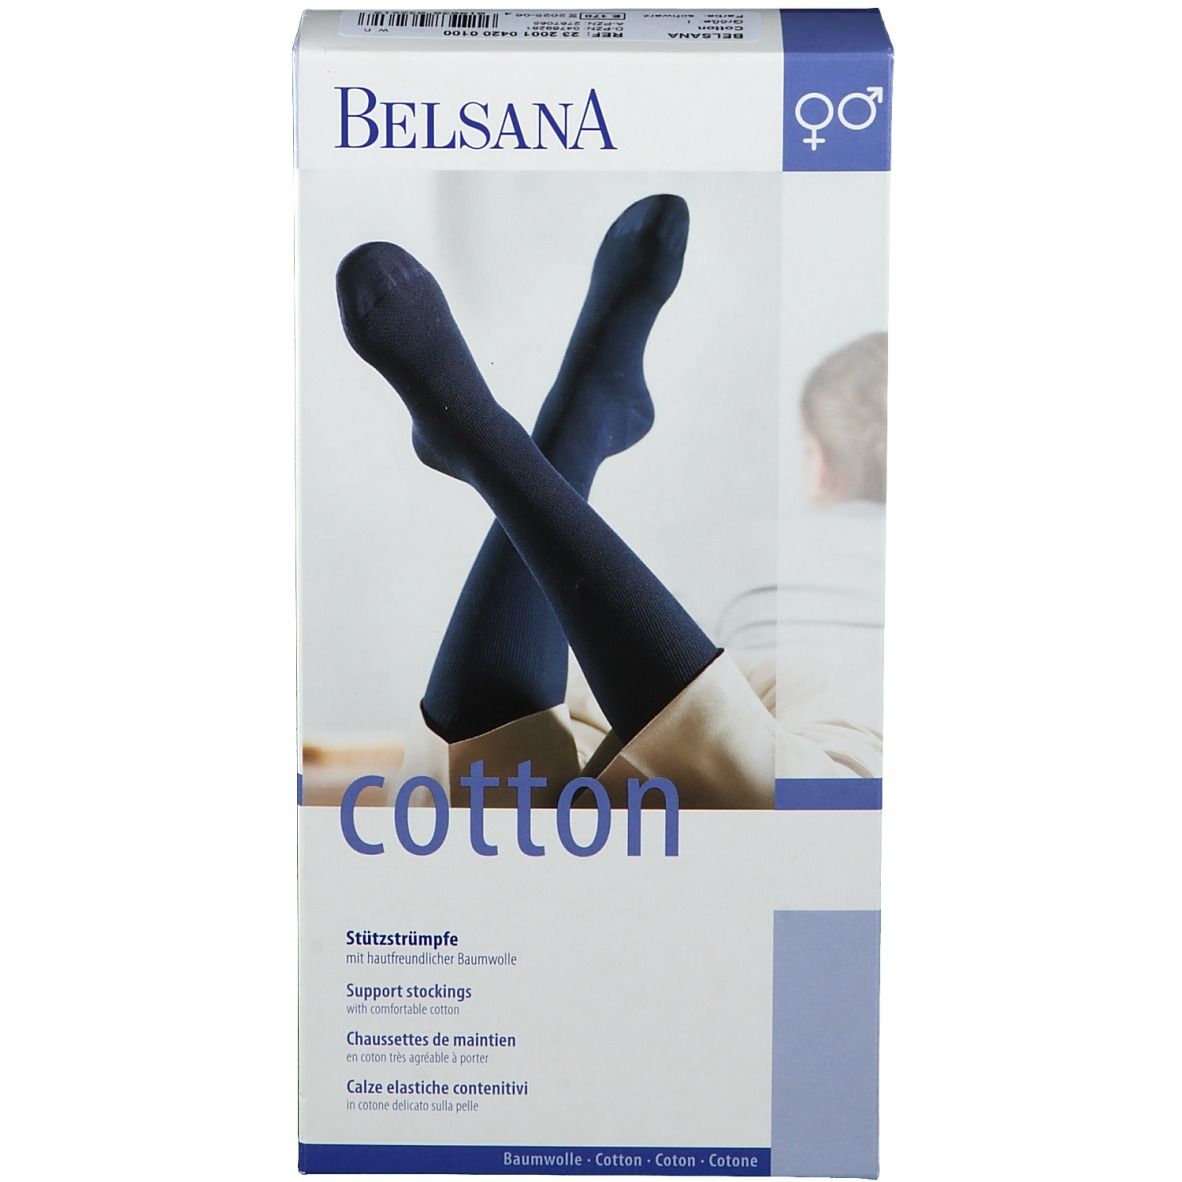 BELSANA Cotton Stützkniestrumpf Gr. 36-38 Farbe schwarz